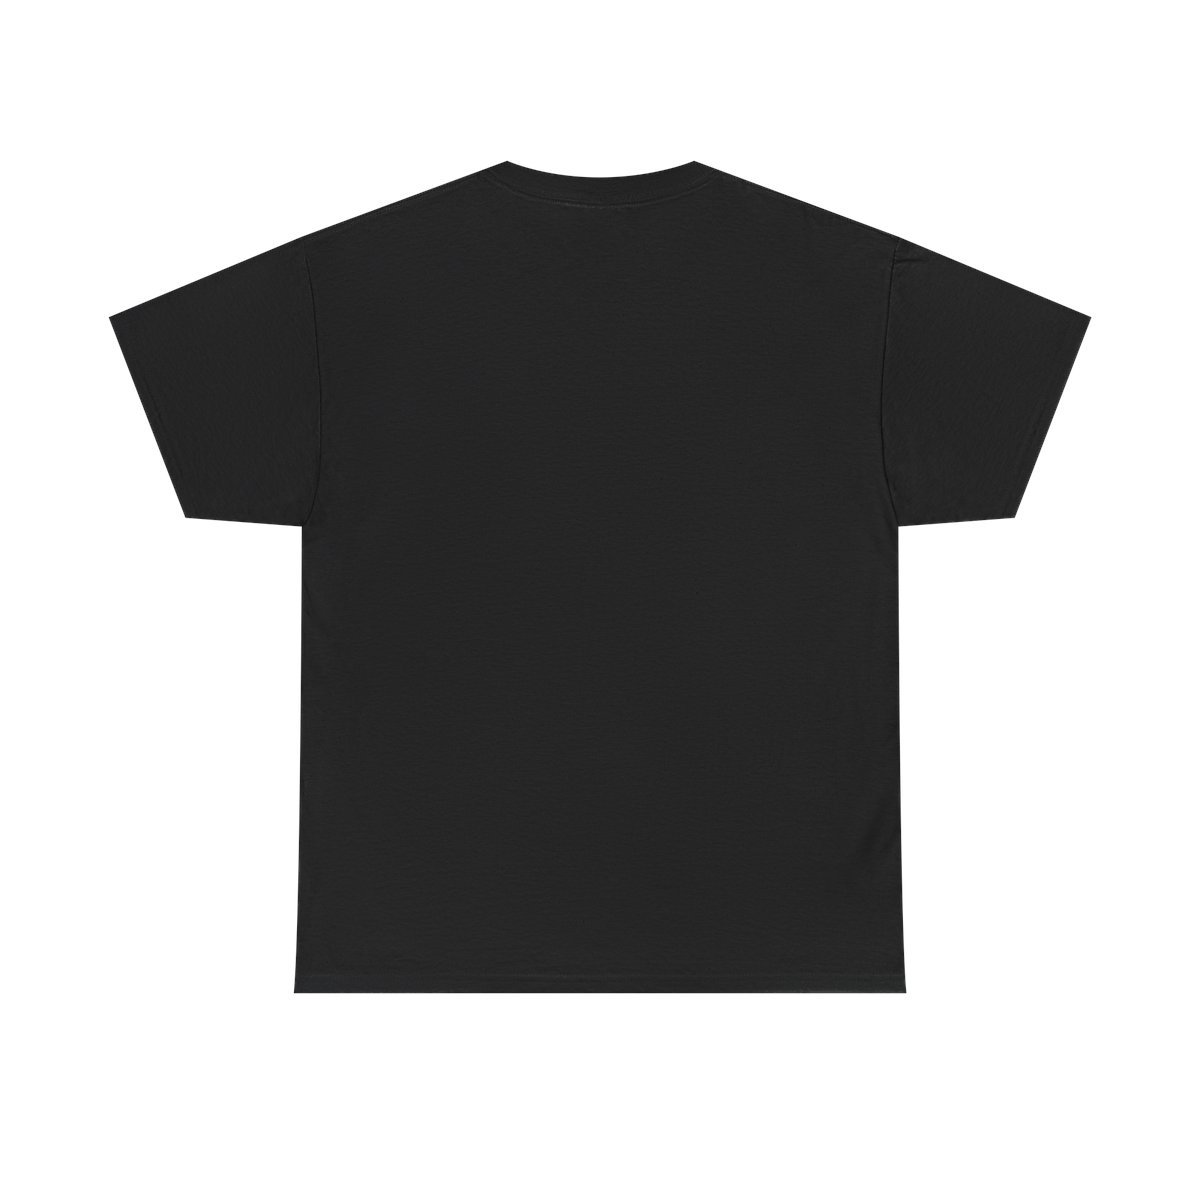 Lordchain – Civil War Short Sleeve Tshirt